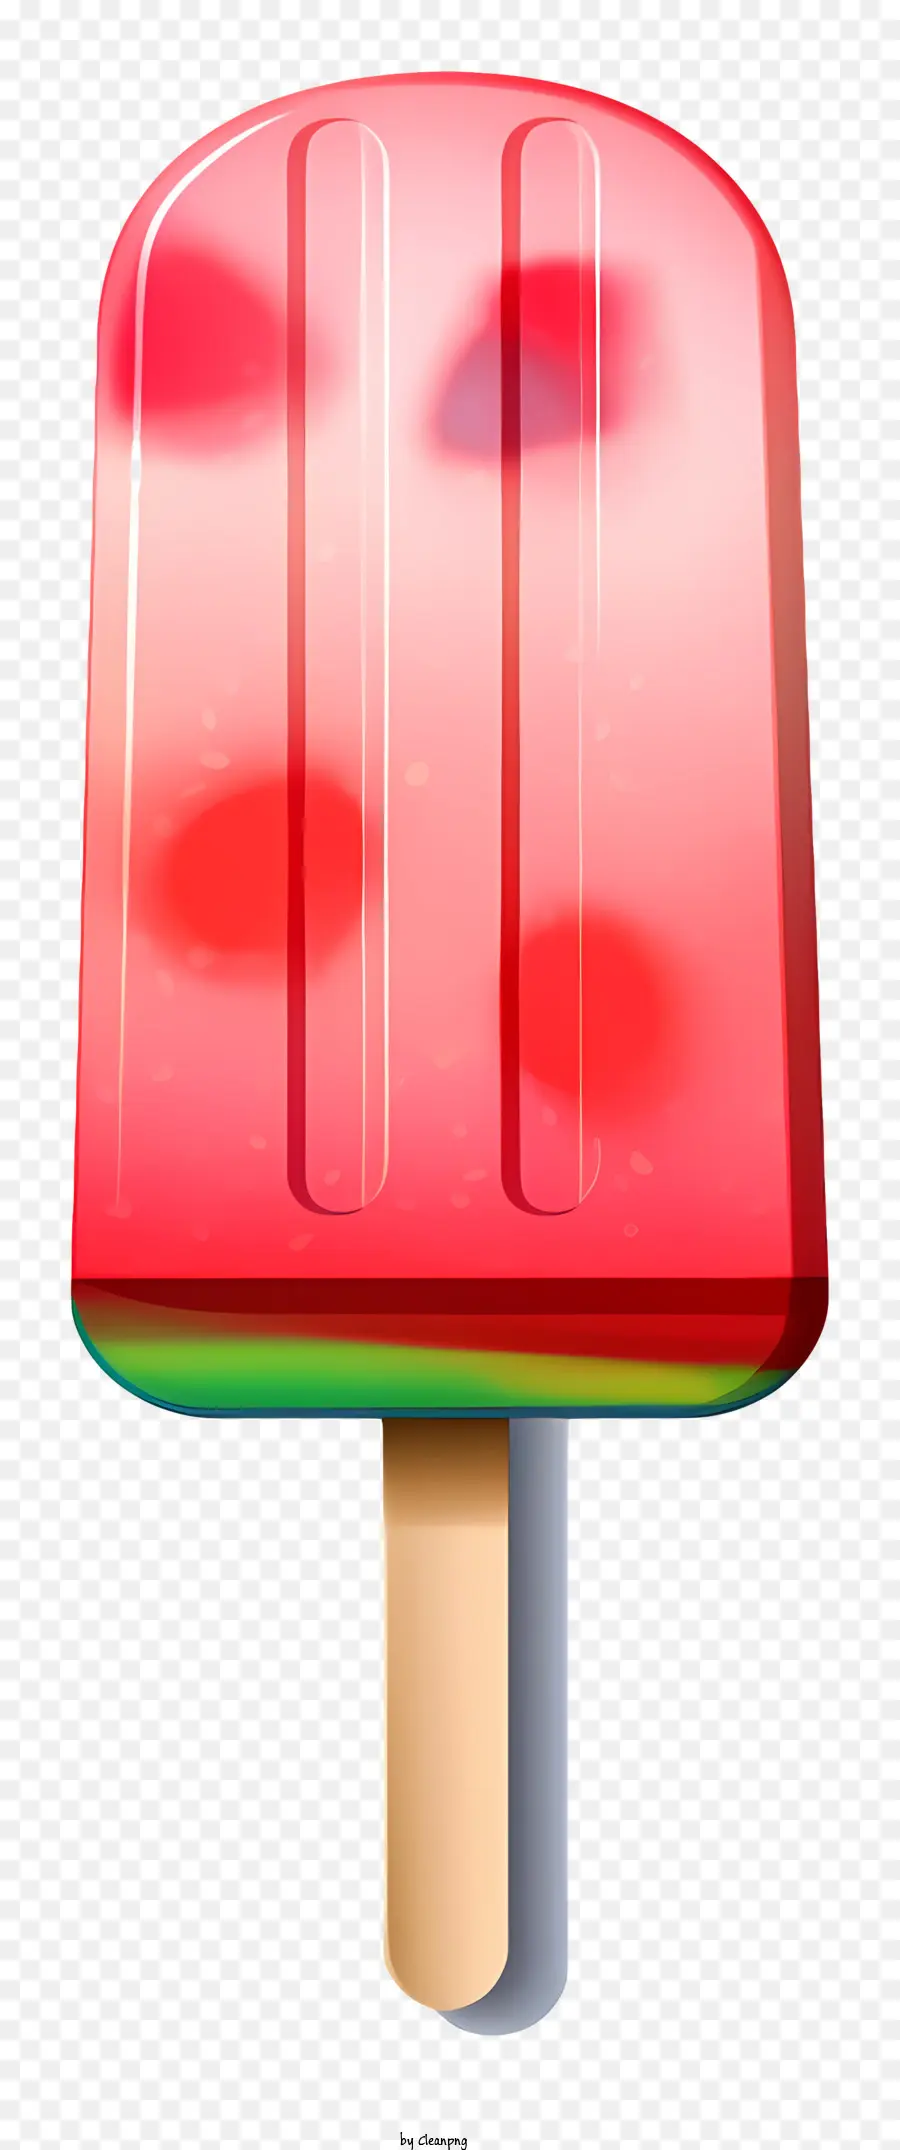 watermelon ice cream ice cream cone red and green ice cream cherry dessert